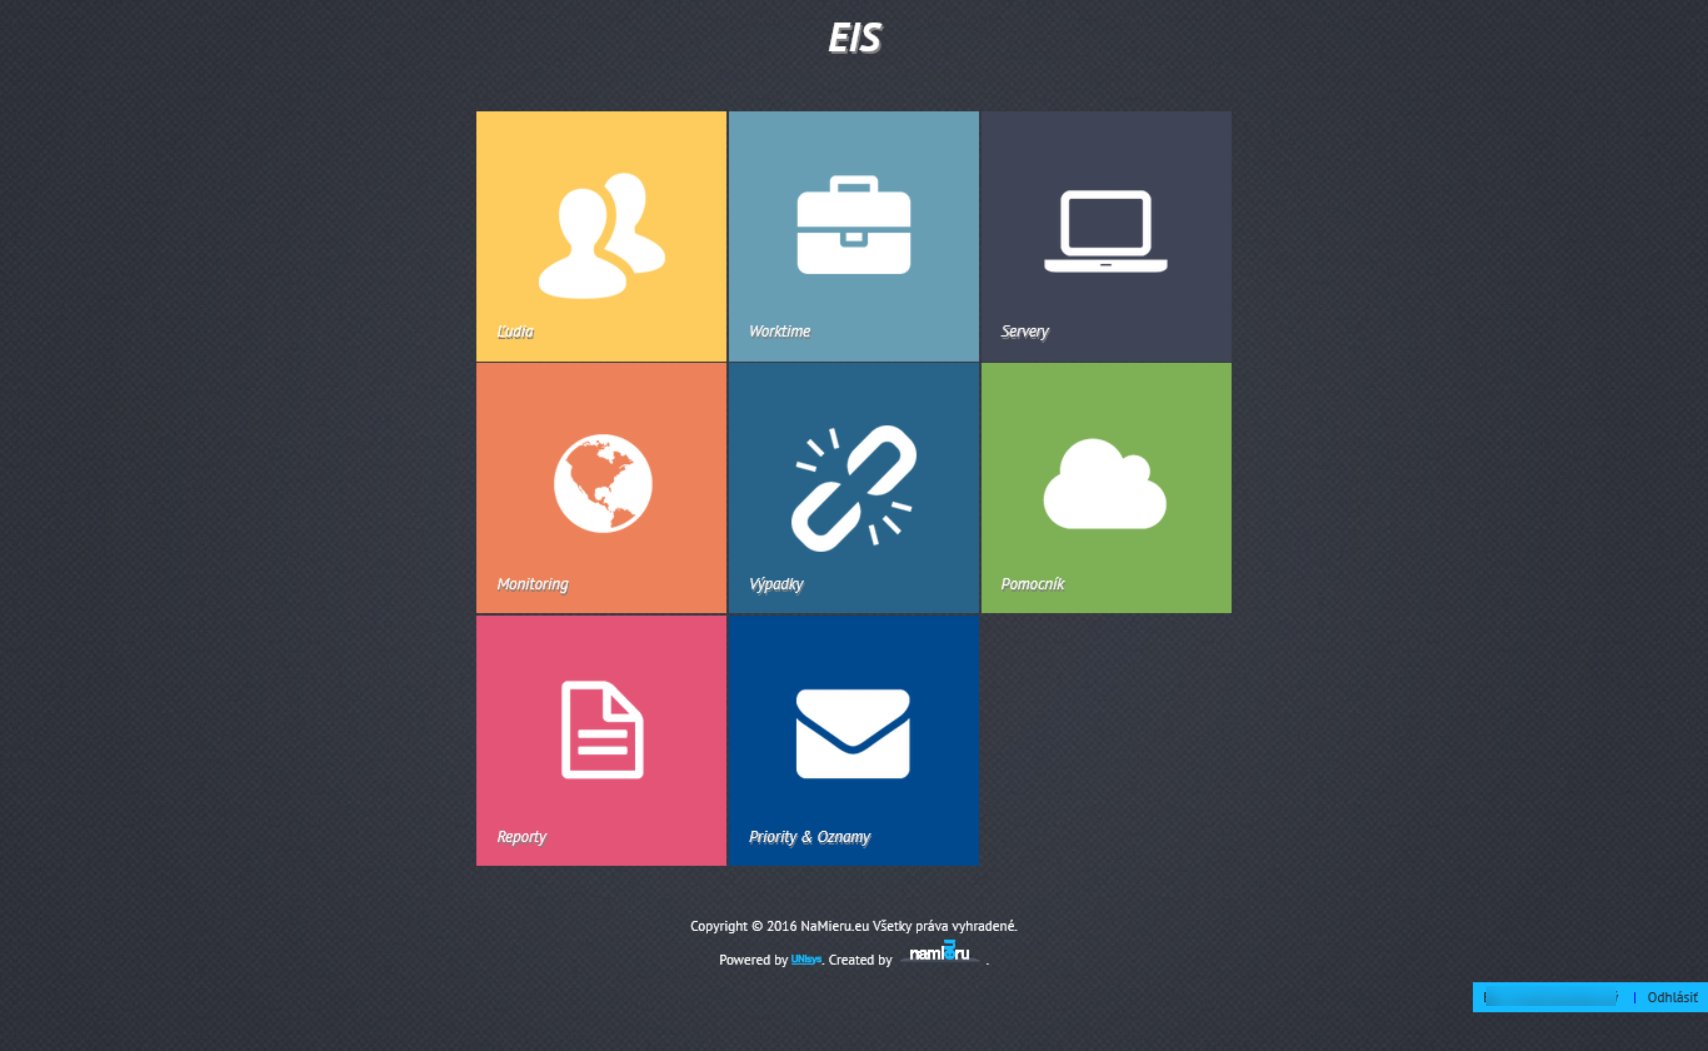 EIS - Enterprise Information System